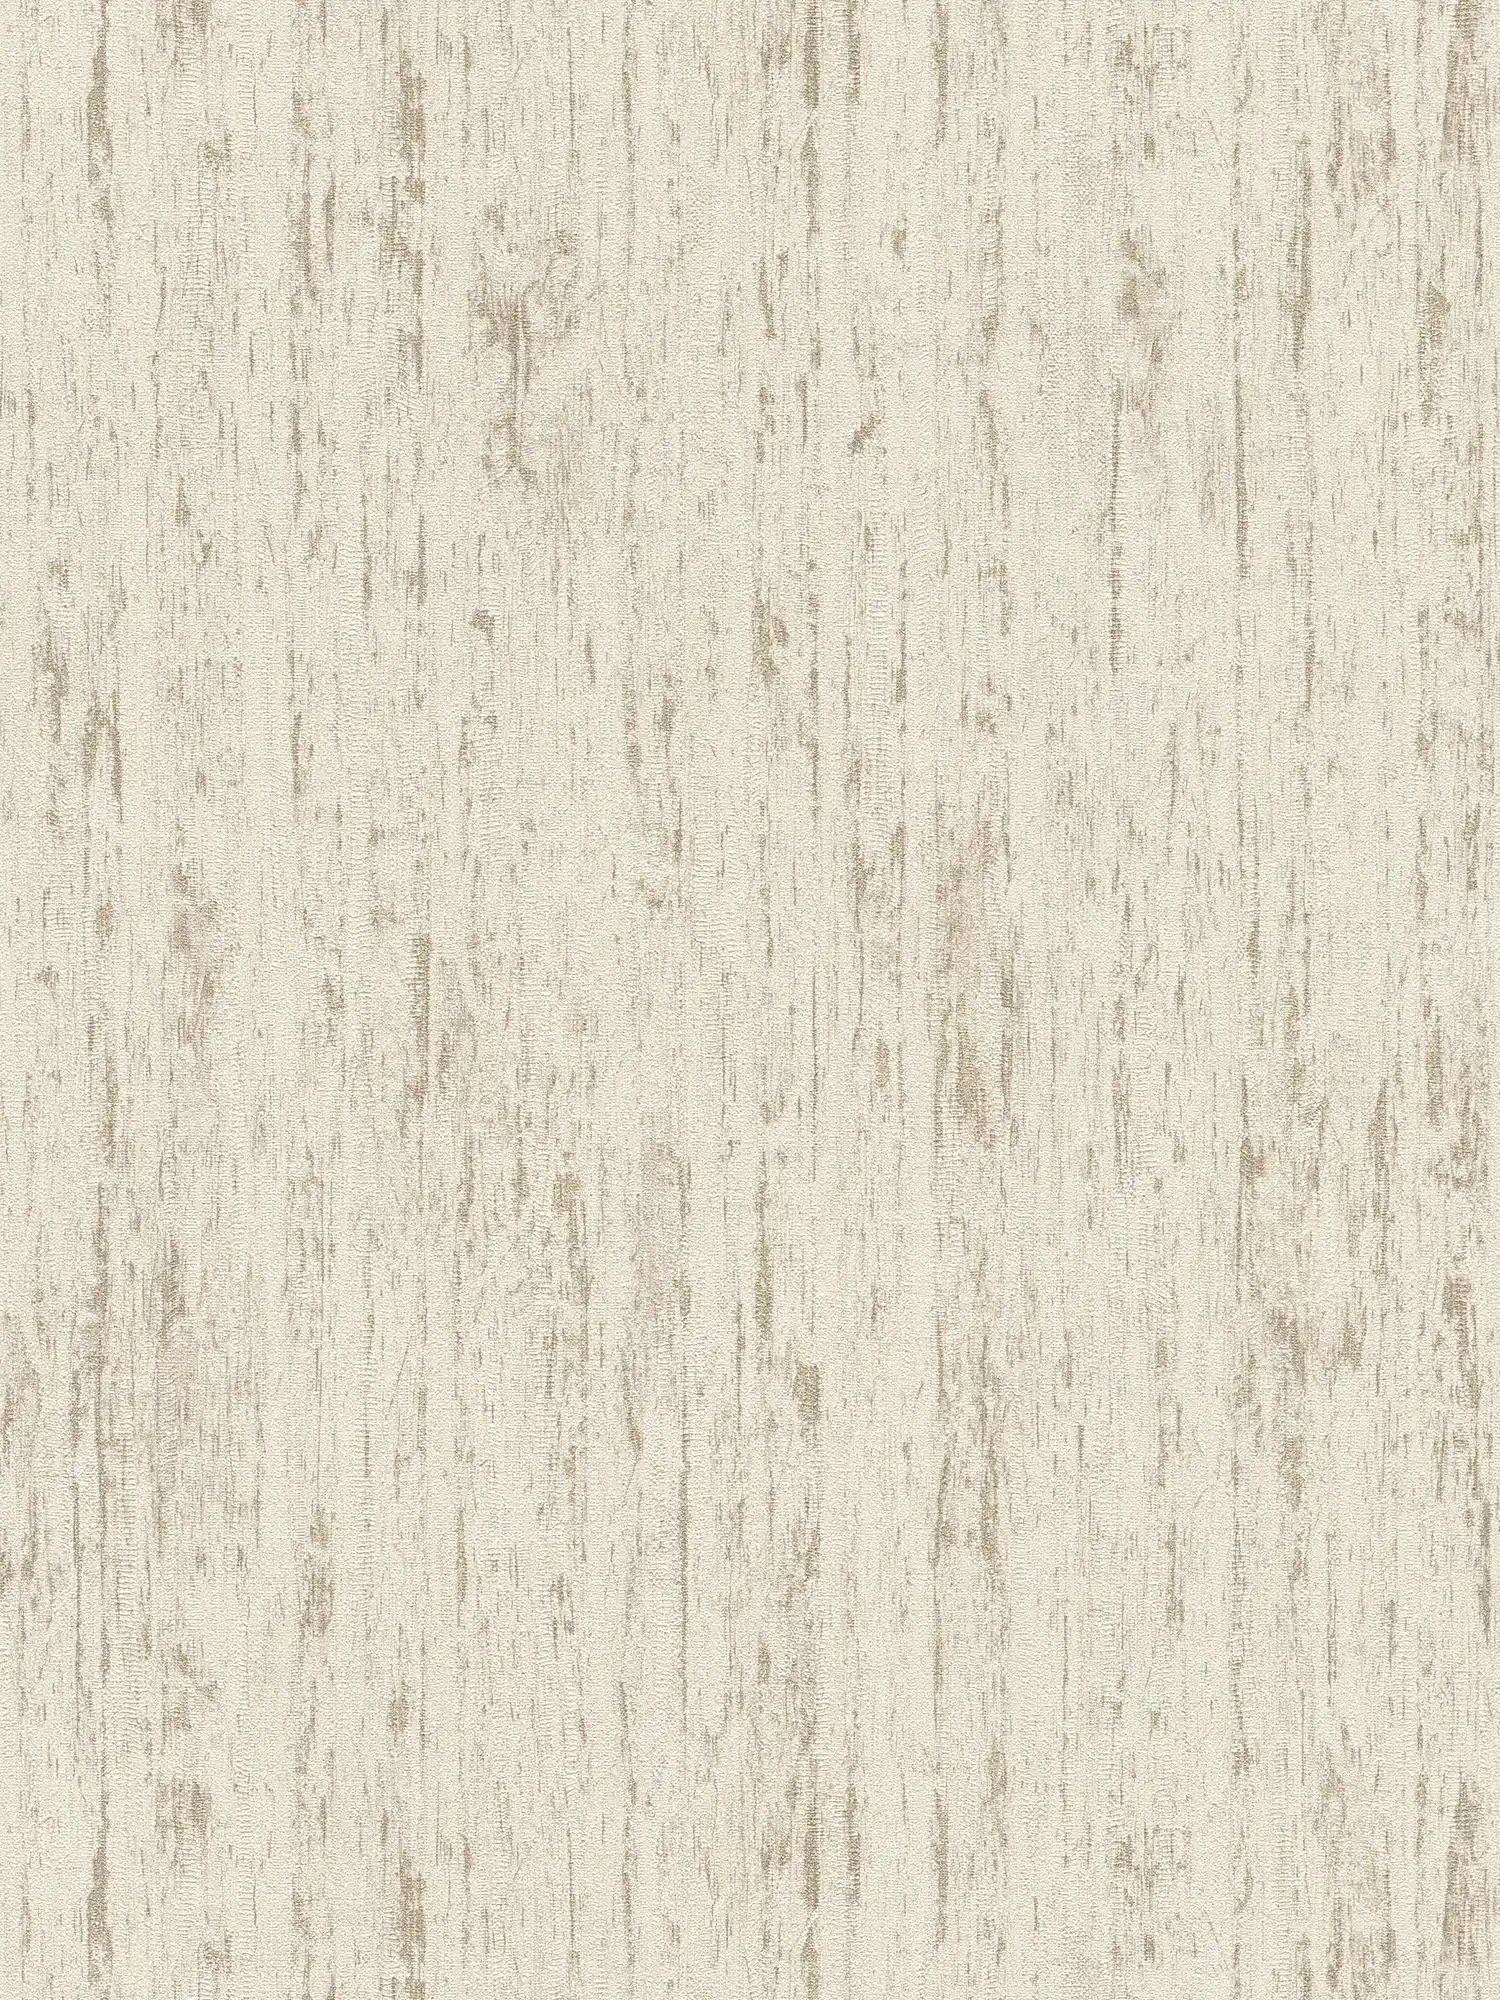         Wallpaper with wavy line pattern - white, beige, gold
    